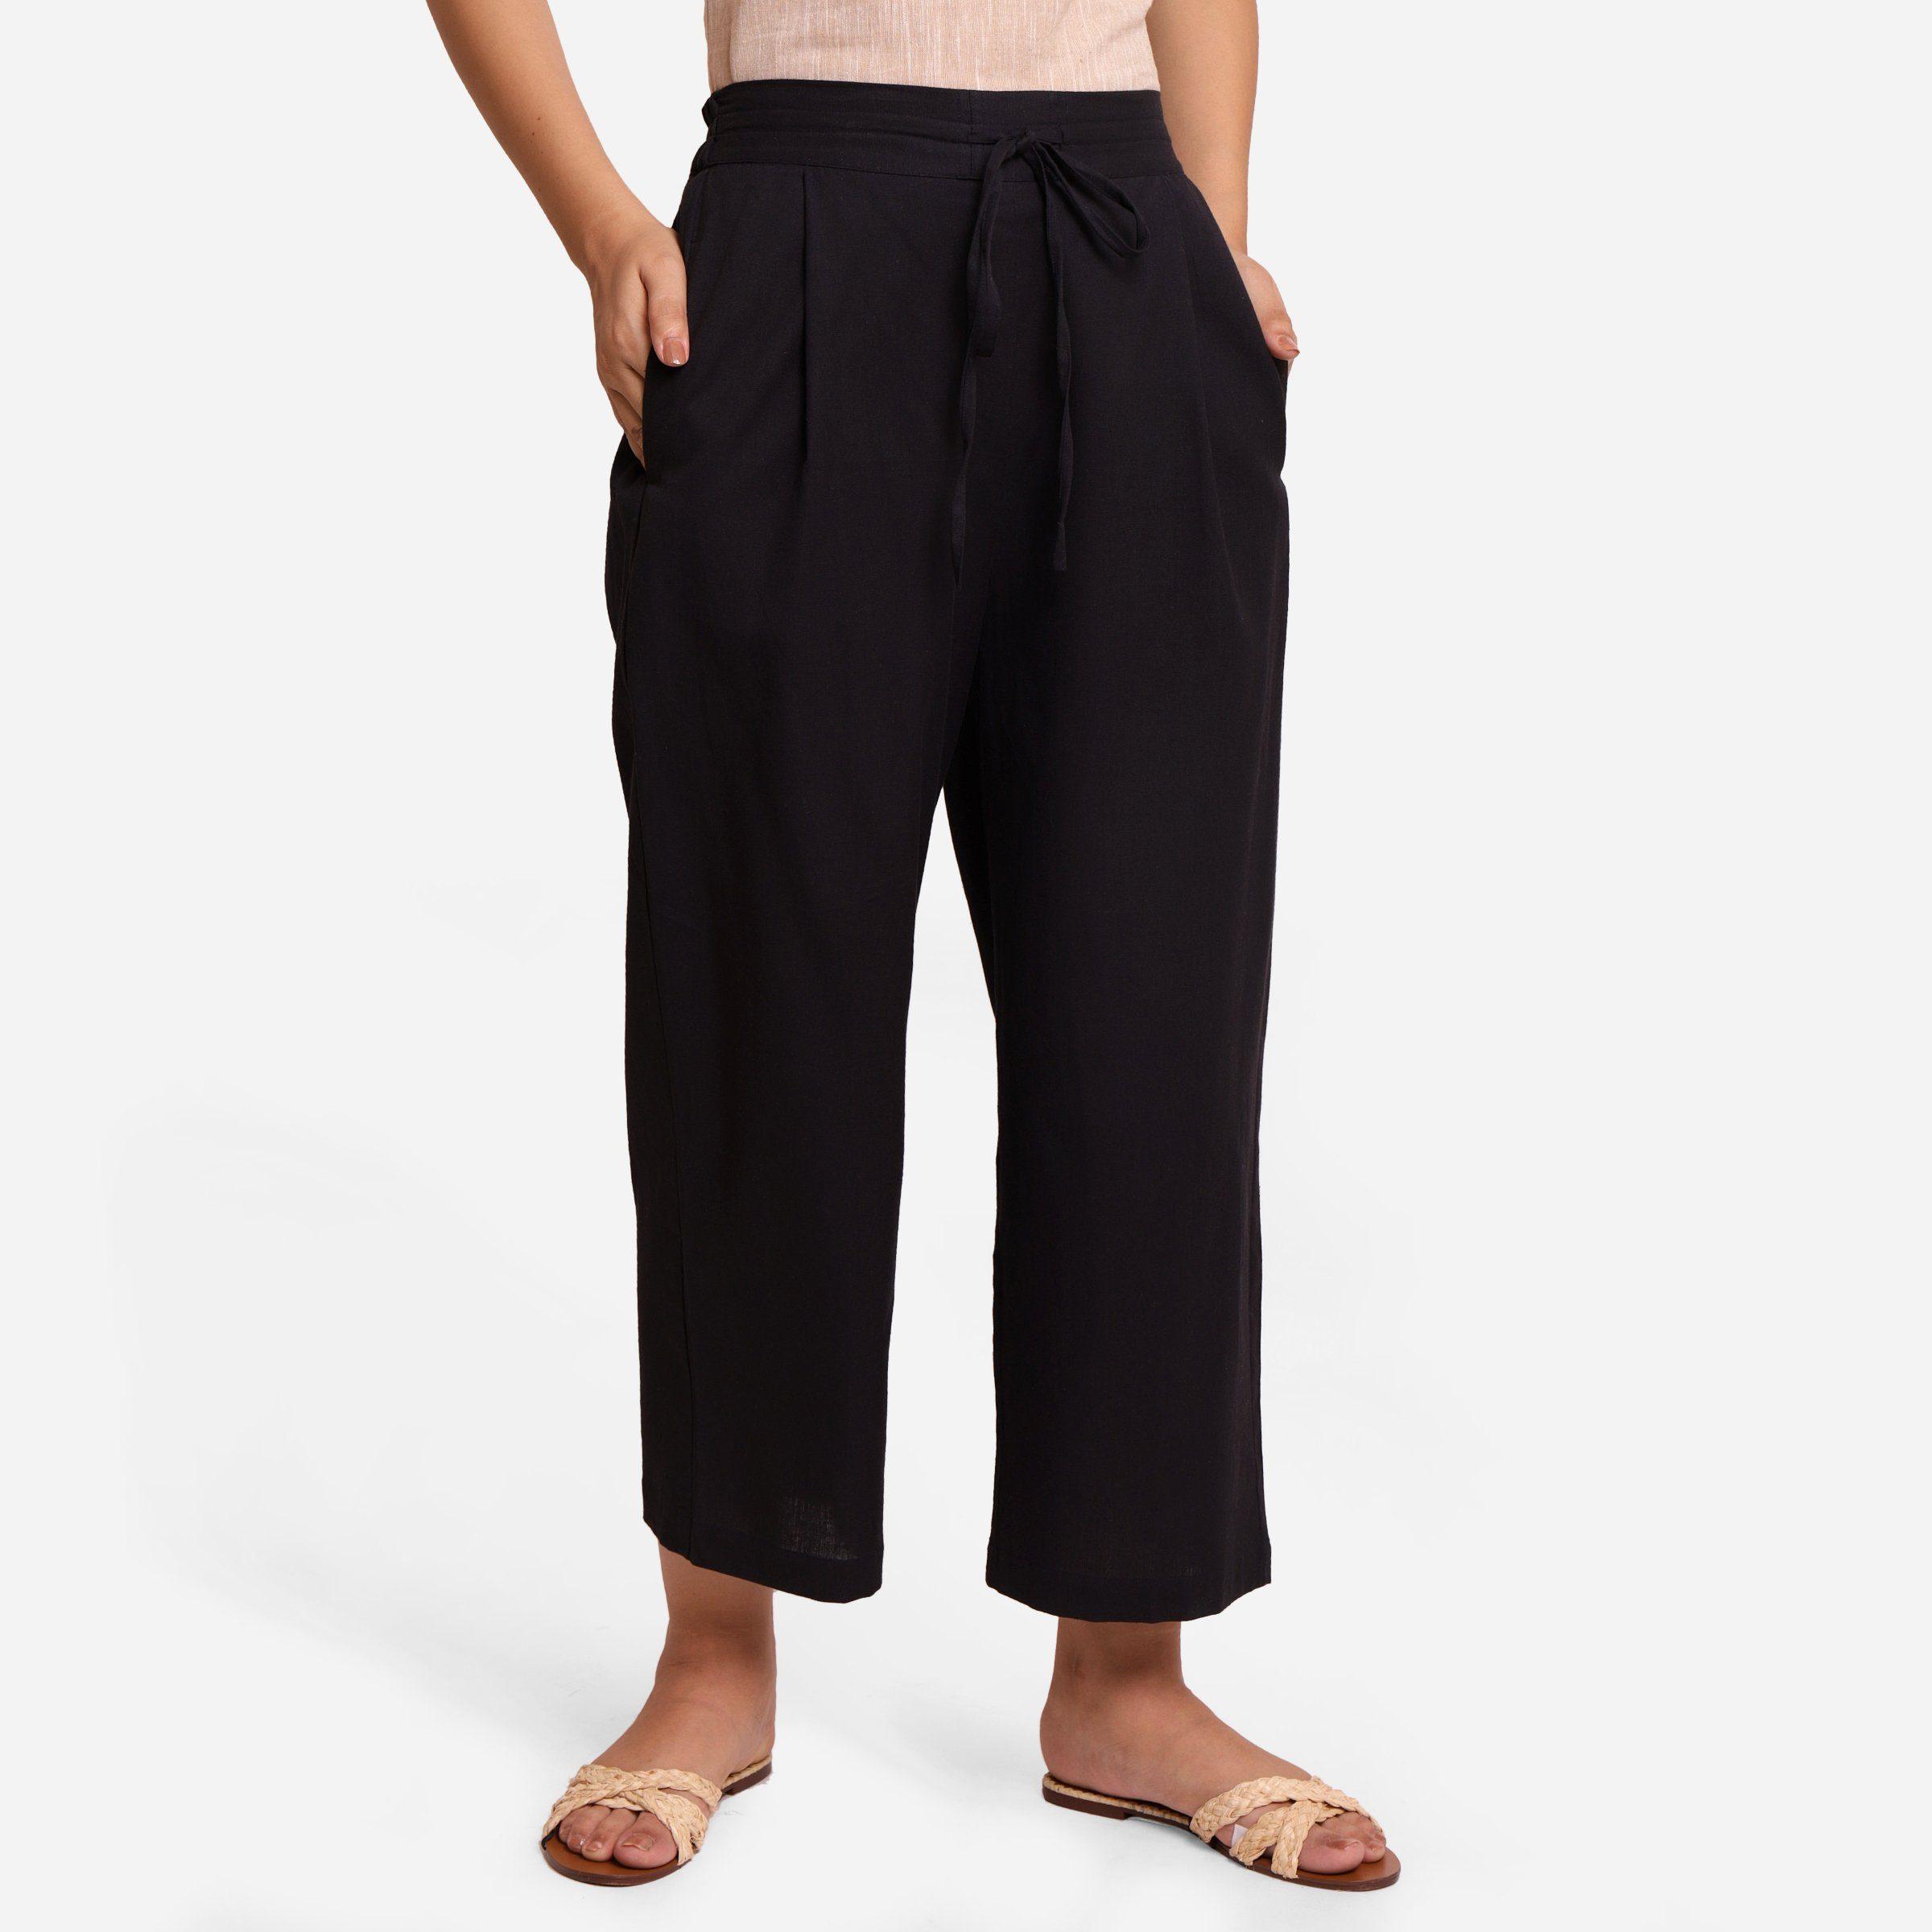 Vislivin Women's Stretch Knit Pajama Pants Modal Sleep Pant Black Thin S at   Women's Clothing store